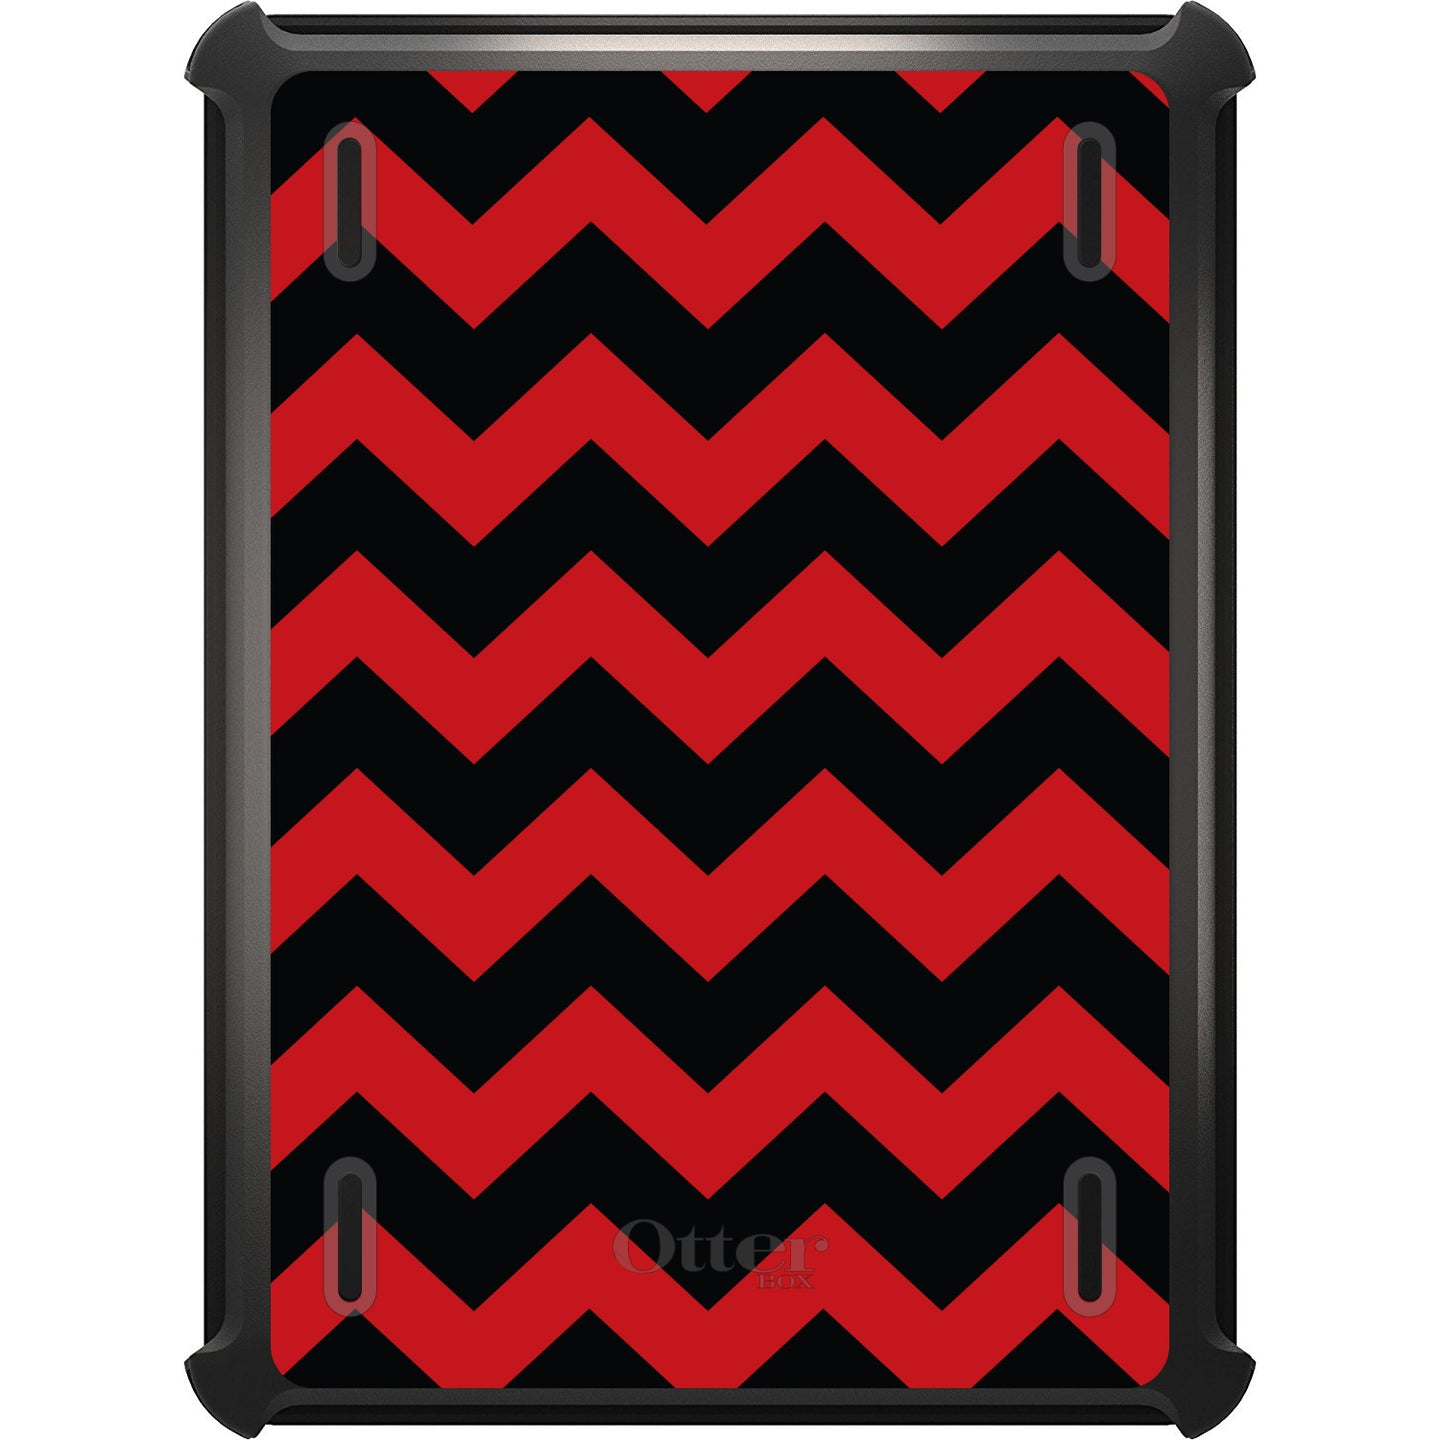 DistinctInk™ OtterBox Defender Series Case for Apple iPad / iPad Pro / iPad Air / iPad Mini - Black Red Chevron Stripes